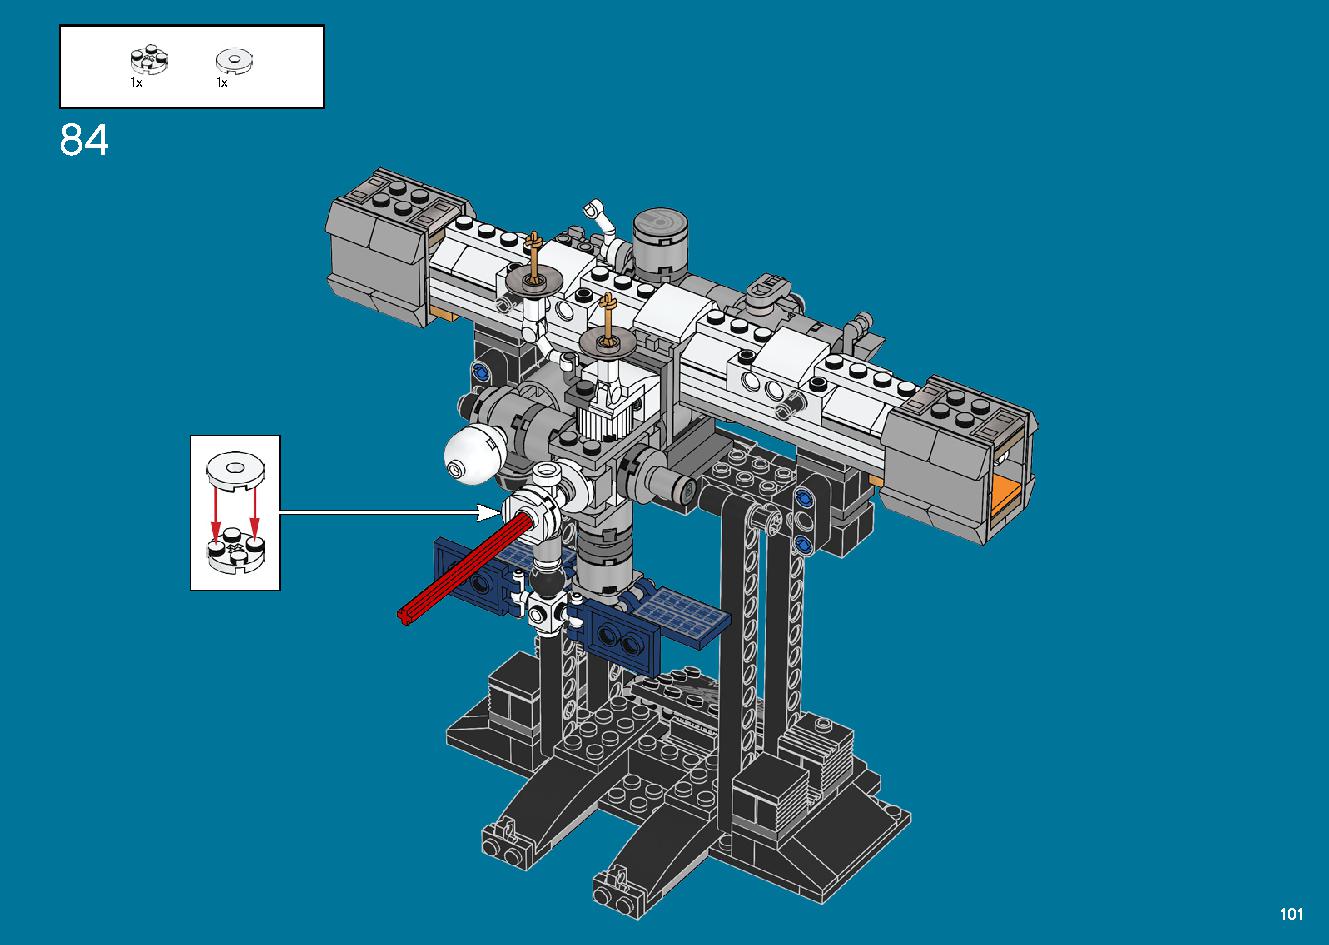 International Space Station 21321 レゴの商品情報 レゴの説明書・組立方法 101 page